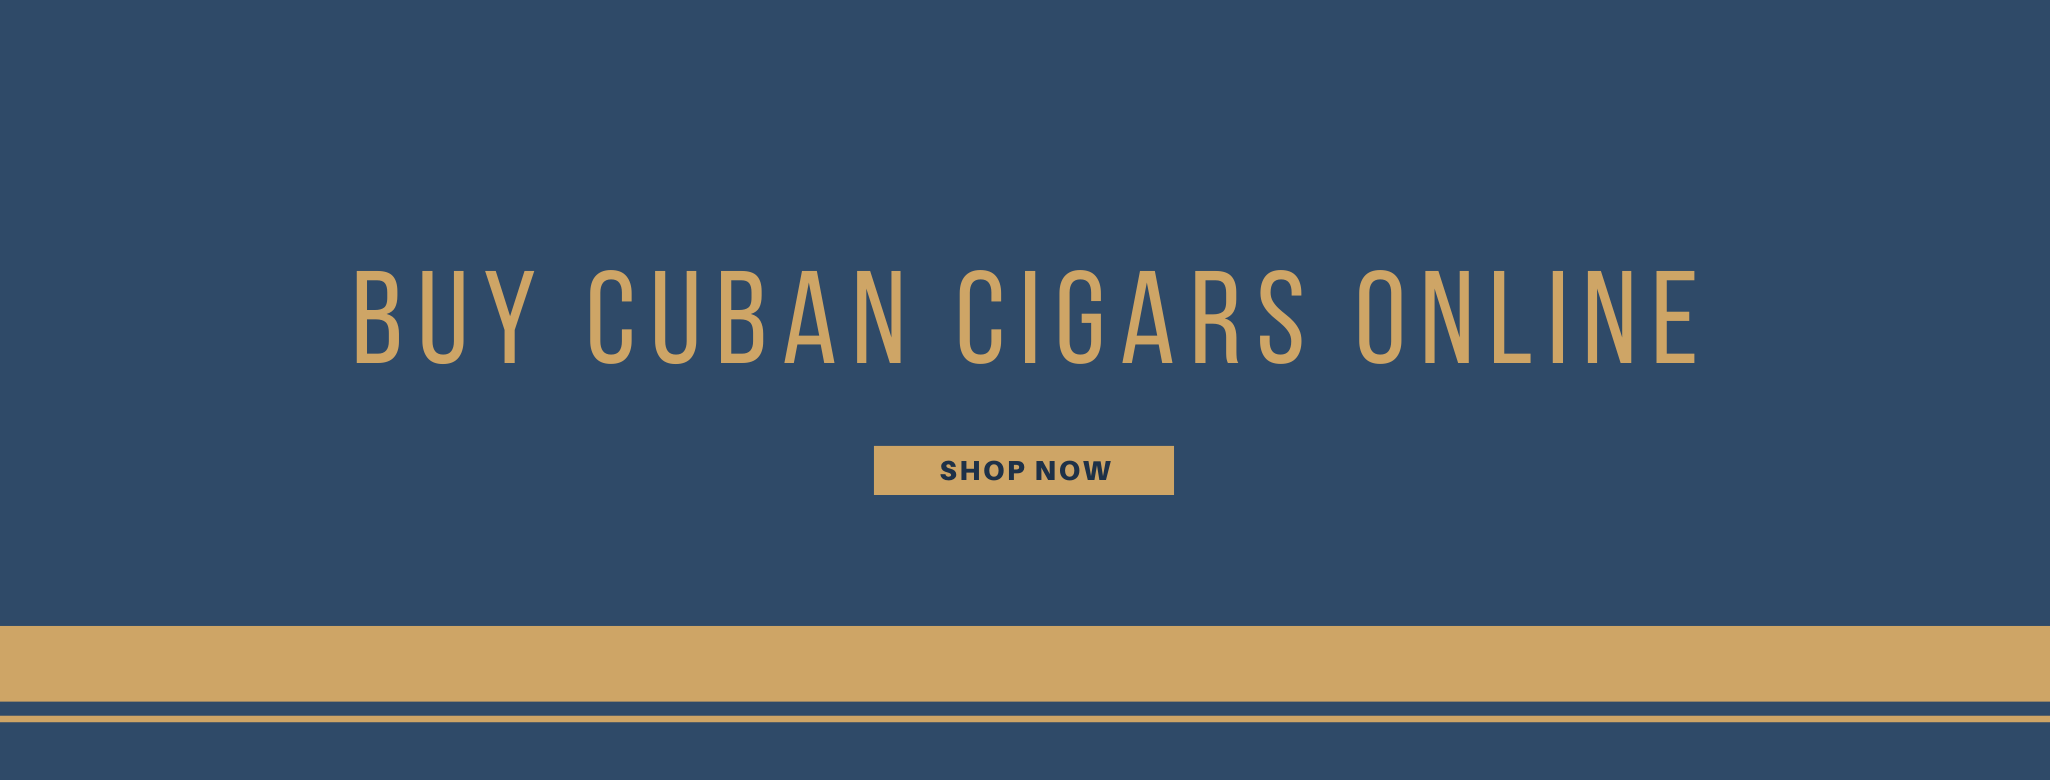 Buy Cuban cigars online banner